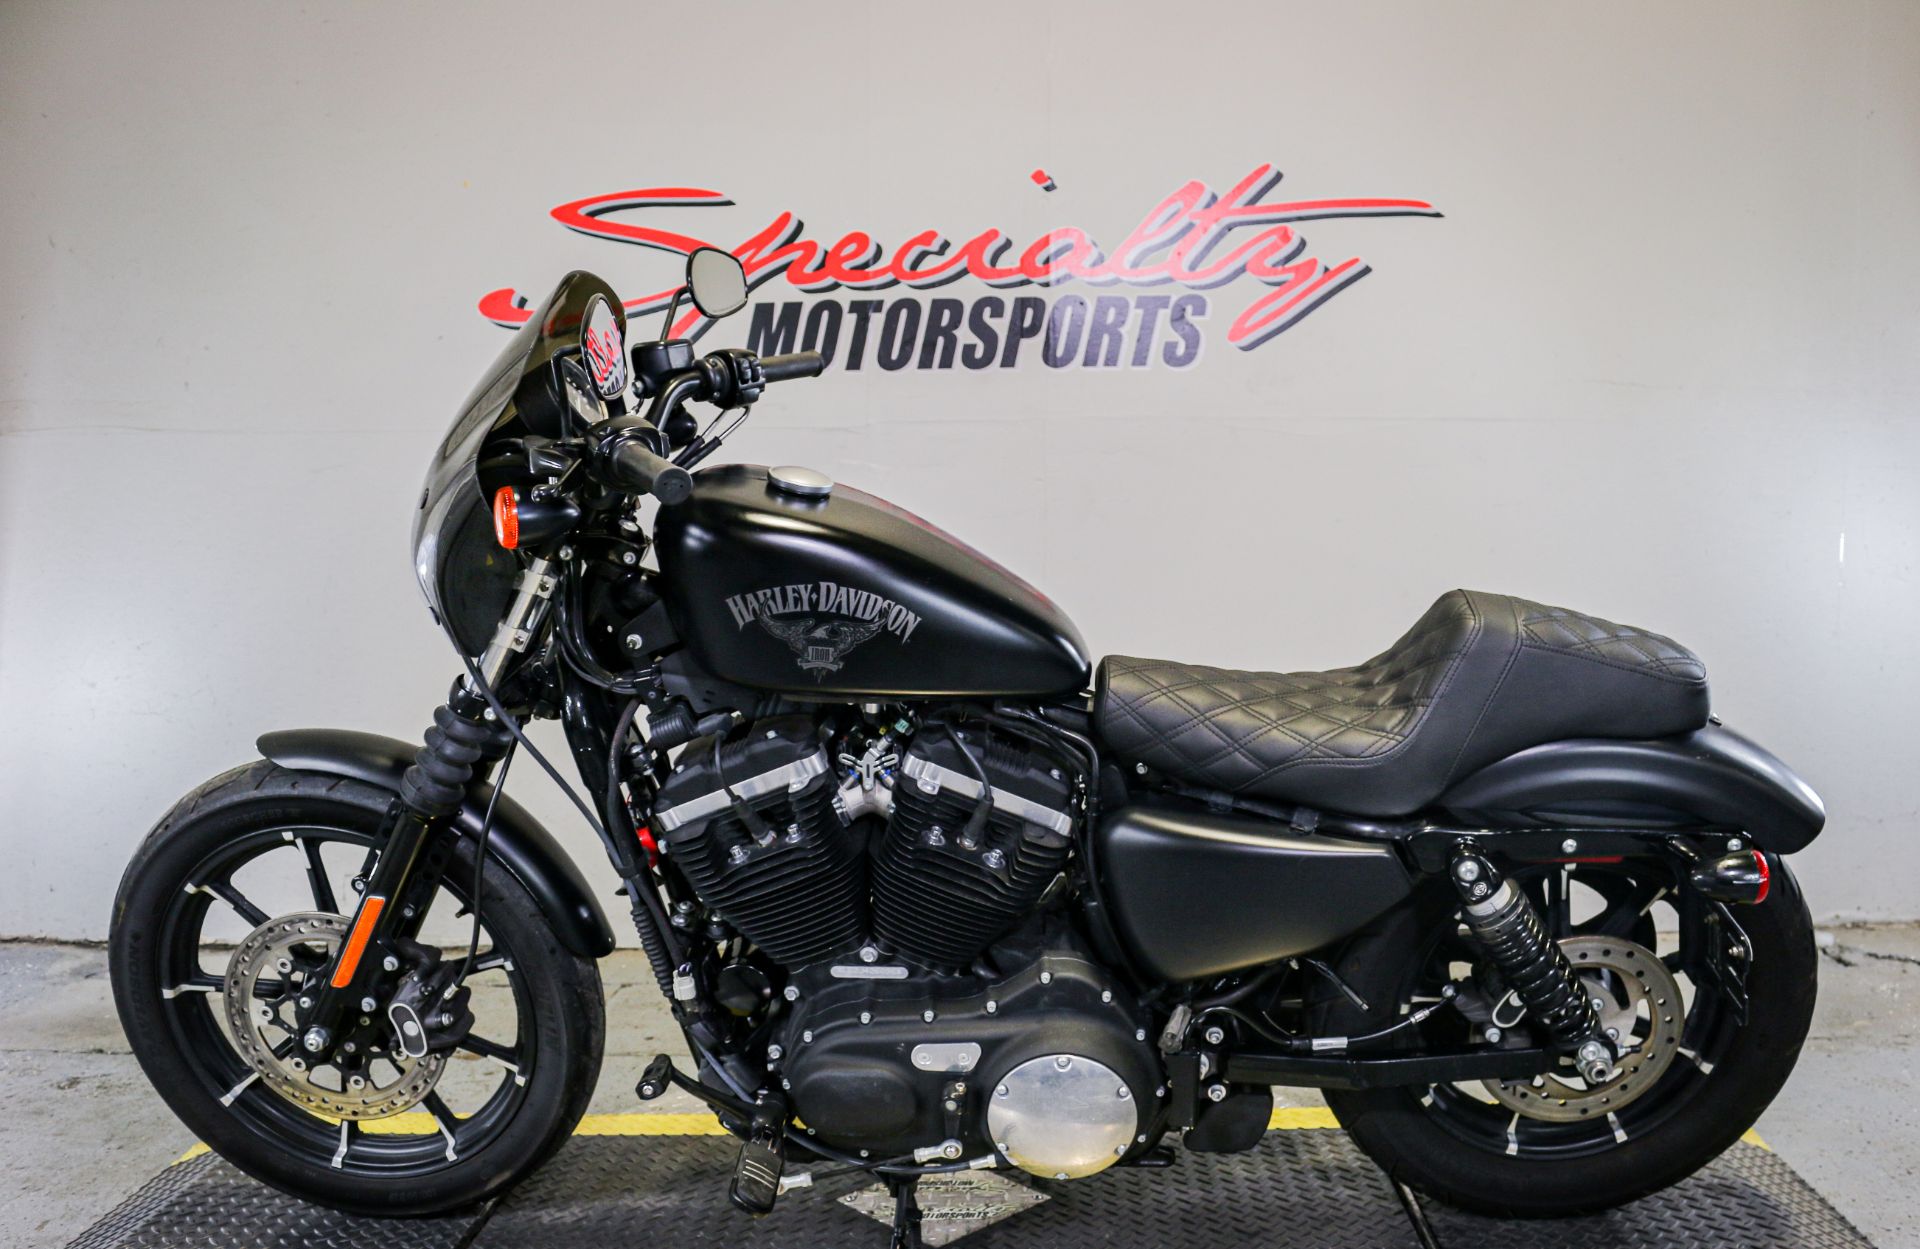 2018 Harley-Davidson Iron 883™ in Sacramento, California - Photo 4